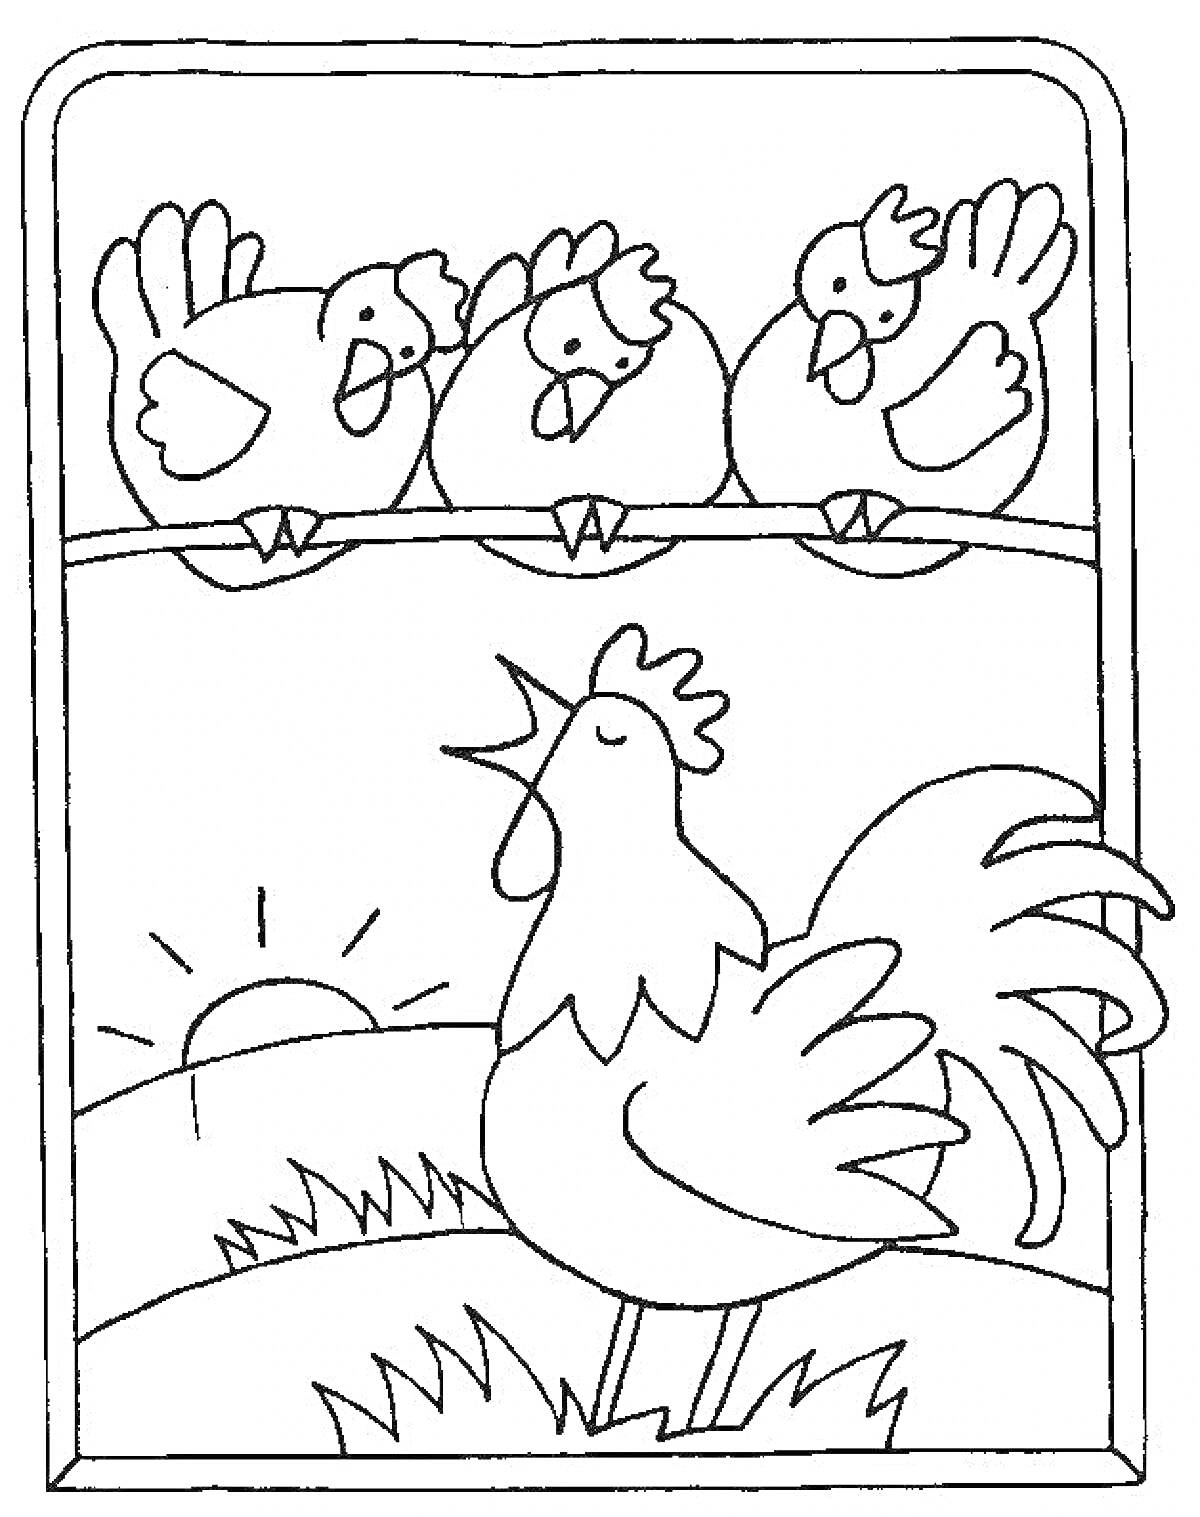 На раскраске изображено: Курицы, Петух, Жердочка, Рассвет, Трава, Ферма, Утро, Птица, Солнце